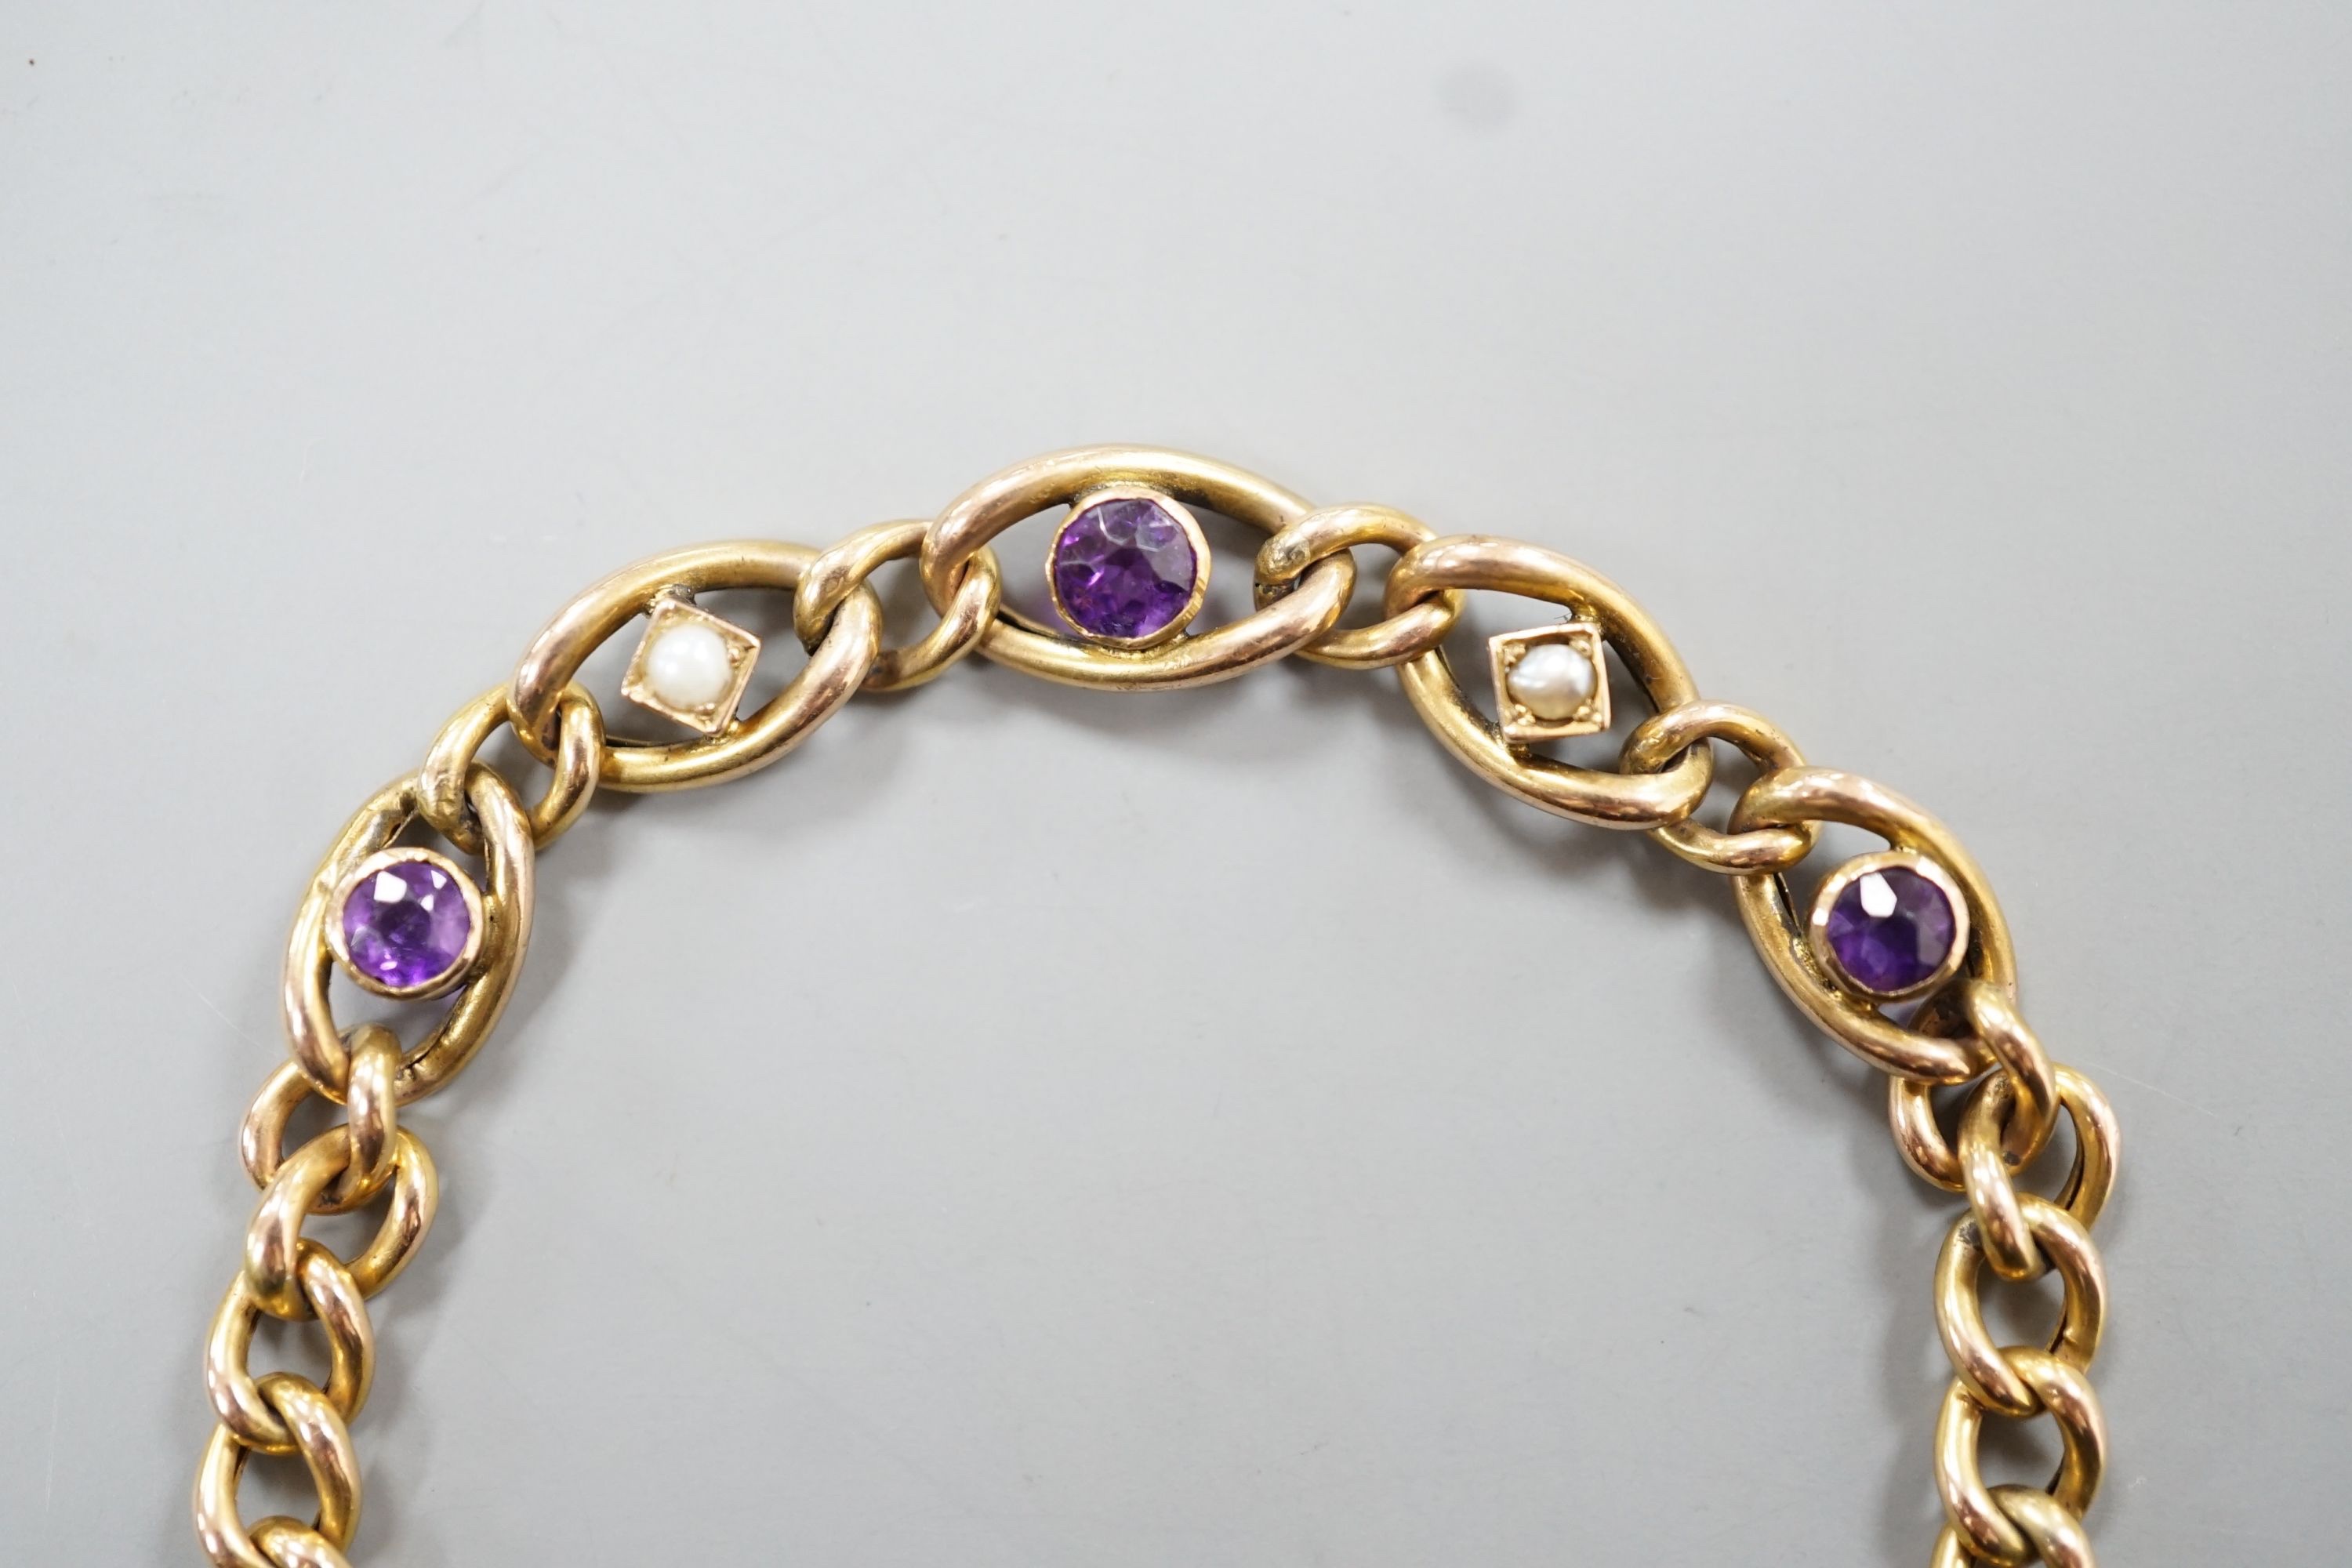 An Edwardian 9ct, amethyst and seed pearl set bracelet, 18cm, 6.1 grams.